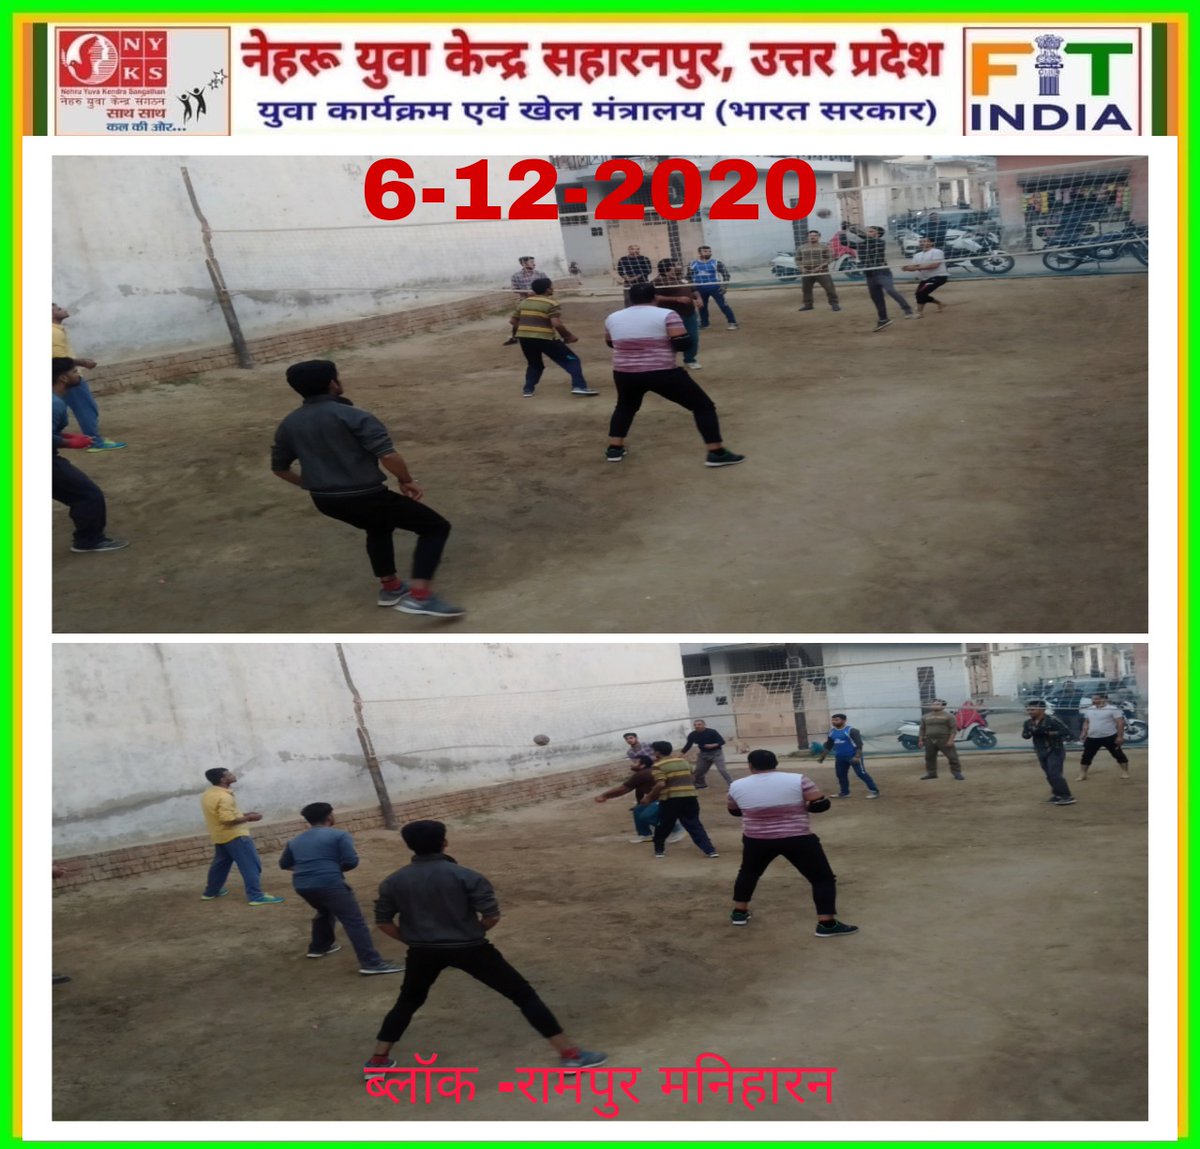 #Fit india#
Vollyball match played by youth members in Rampur Maniharan block that is affiliated by Nehru yuva kendra, #Saharanpur 
फिटनेस का डोज़ आधा घंटा रोज 
@KirenRijiju @FitIndiaOff 
@PMOIndia @YuvaSaharanpur
@YASMinistry